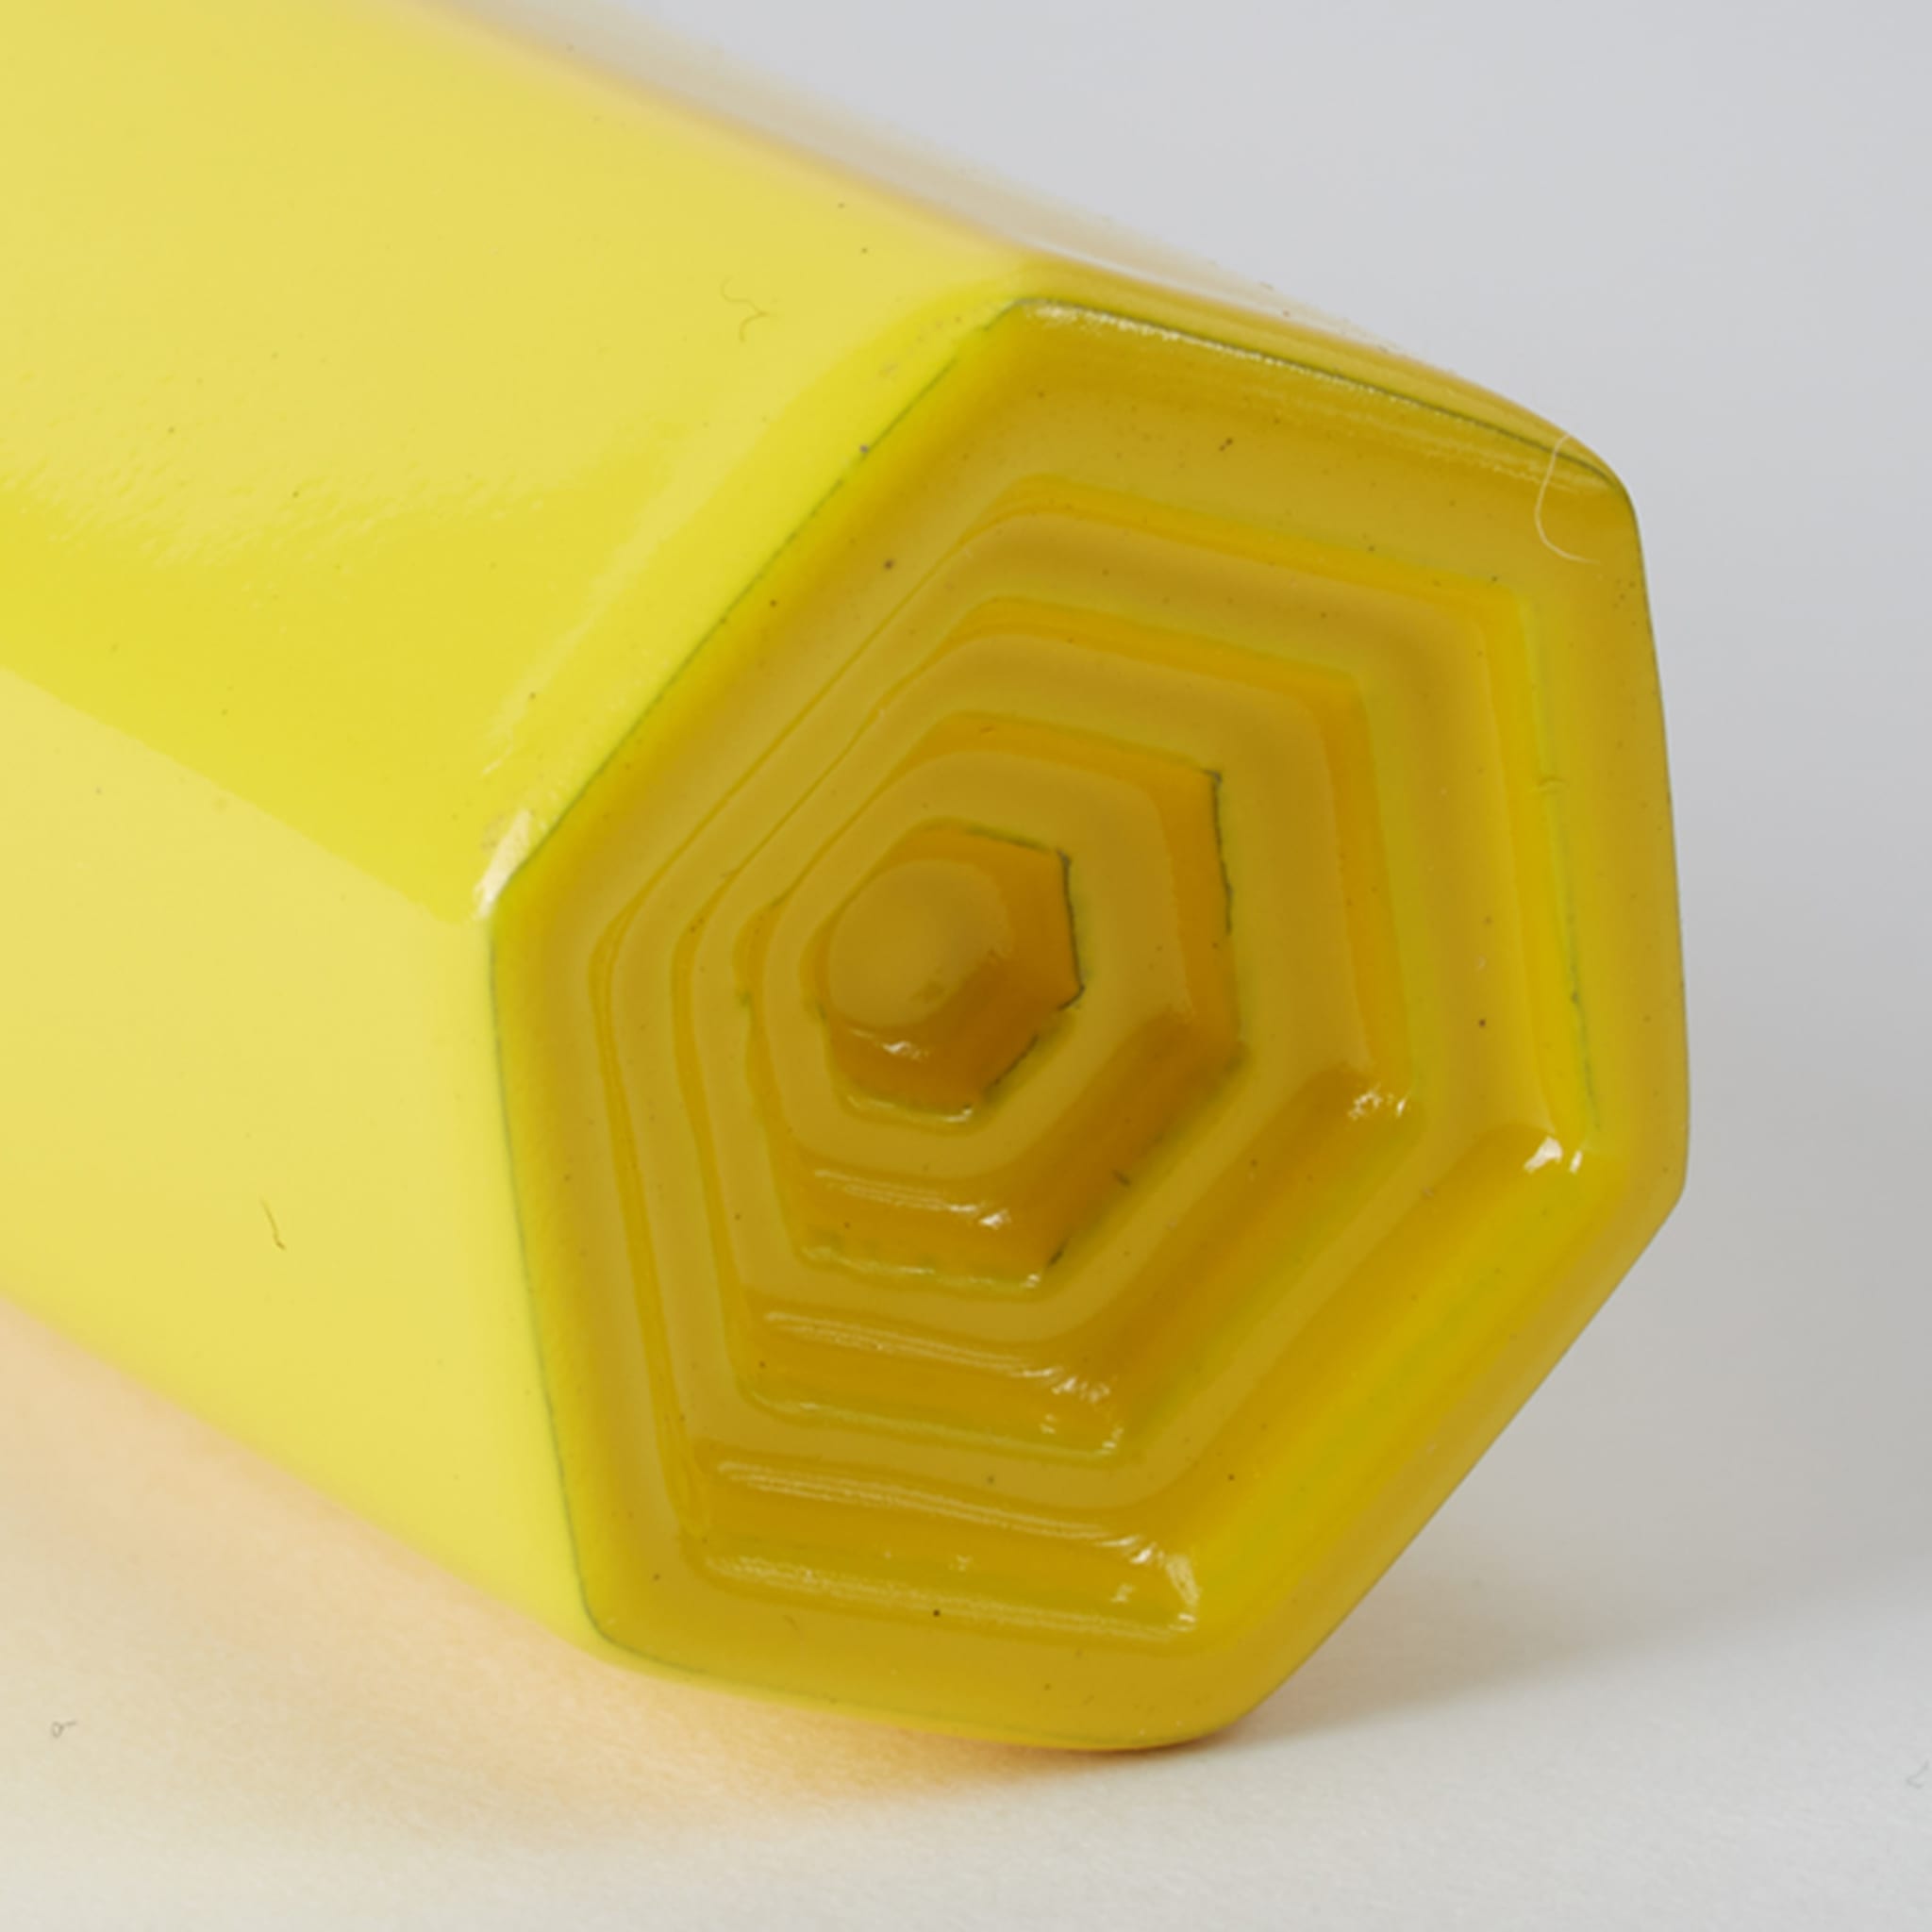 Prisma Polished Yellow Handle by Nicole Valenti - Alternative view 1